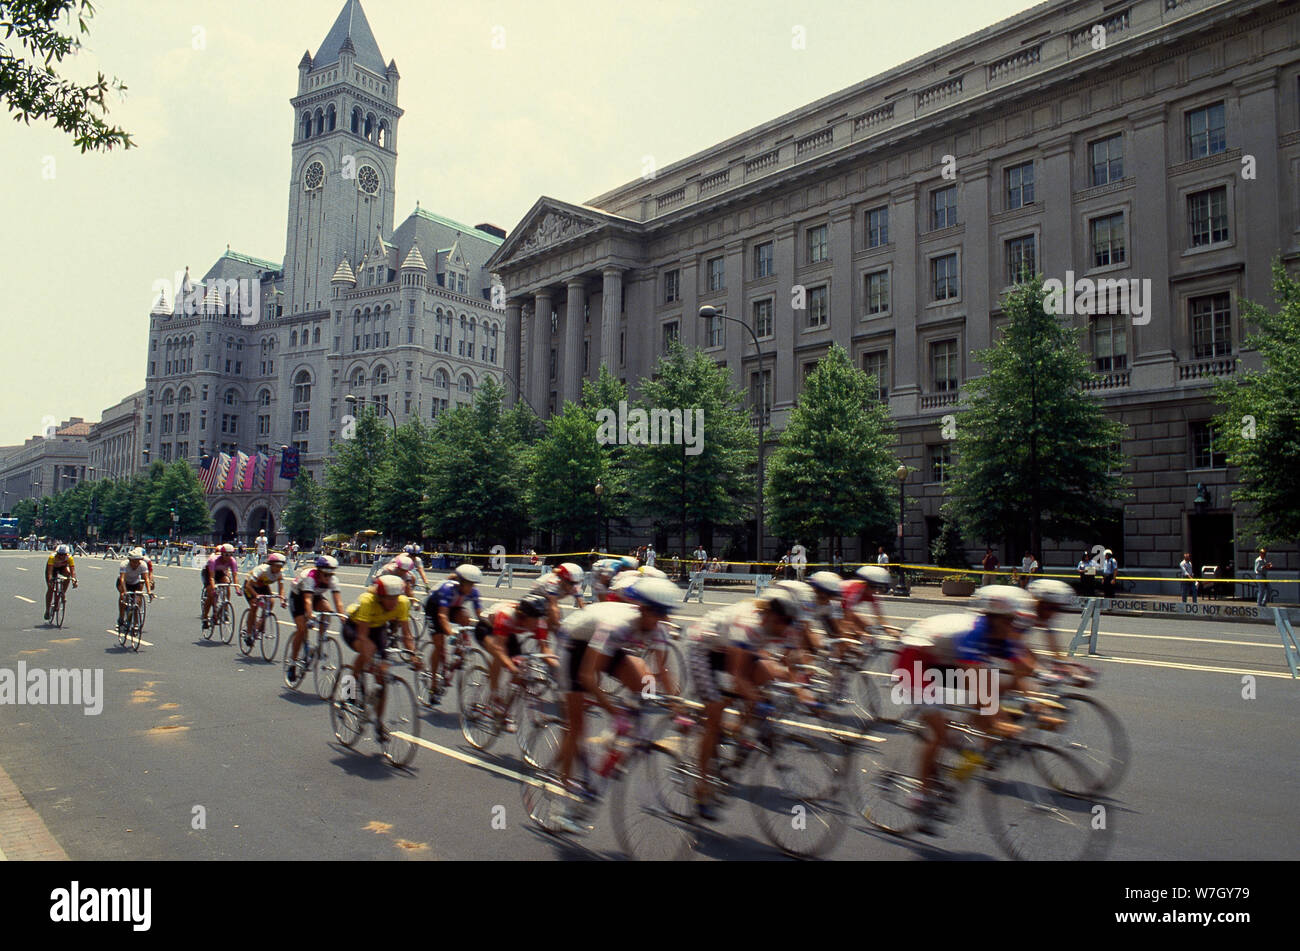 Bike race on Pennsylvania Avenue, Washington, D.C Stock Photo